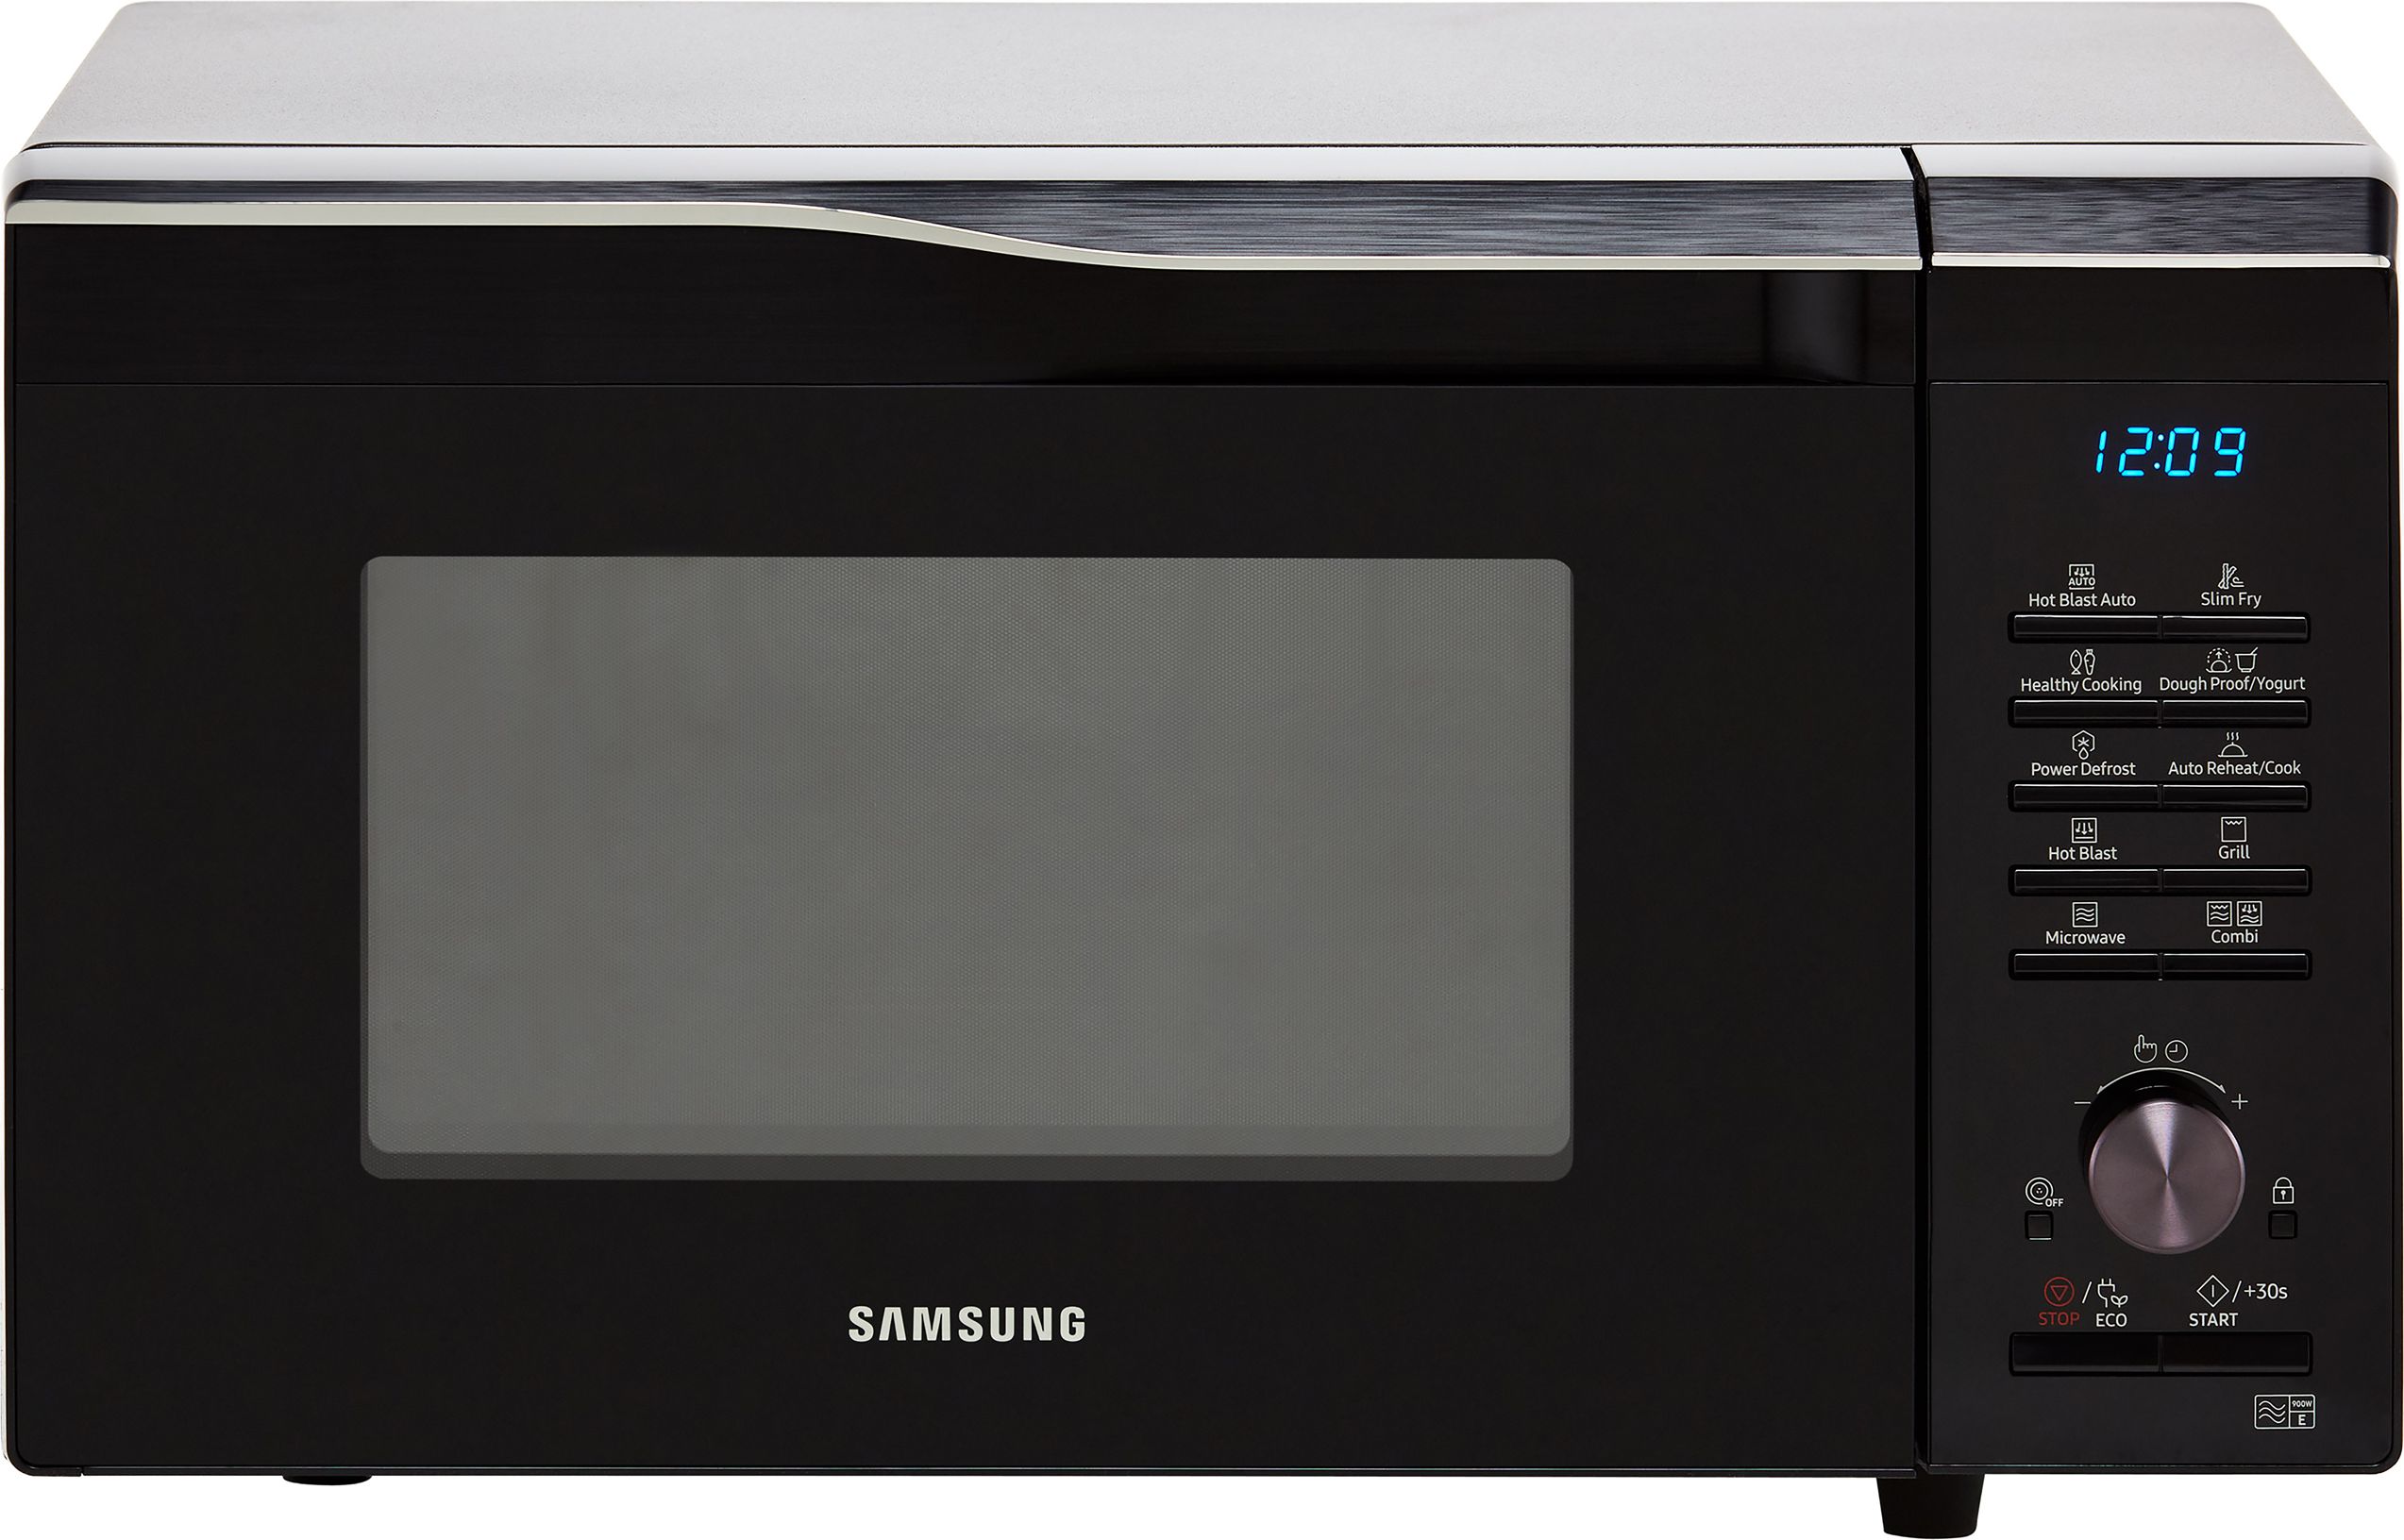 Samsung Easy View MC28M6055CK 31cm tall, 52cm wide, Freestanding Microwave - Black, Black